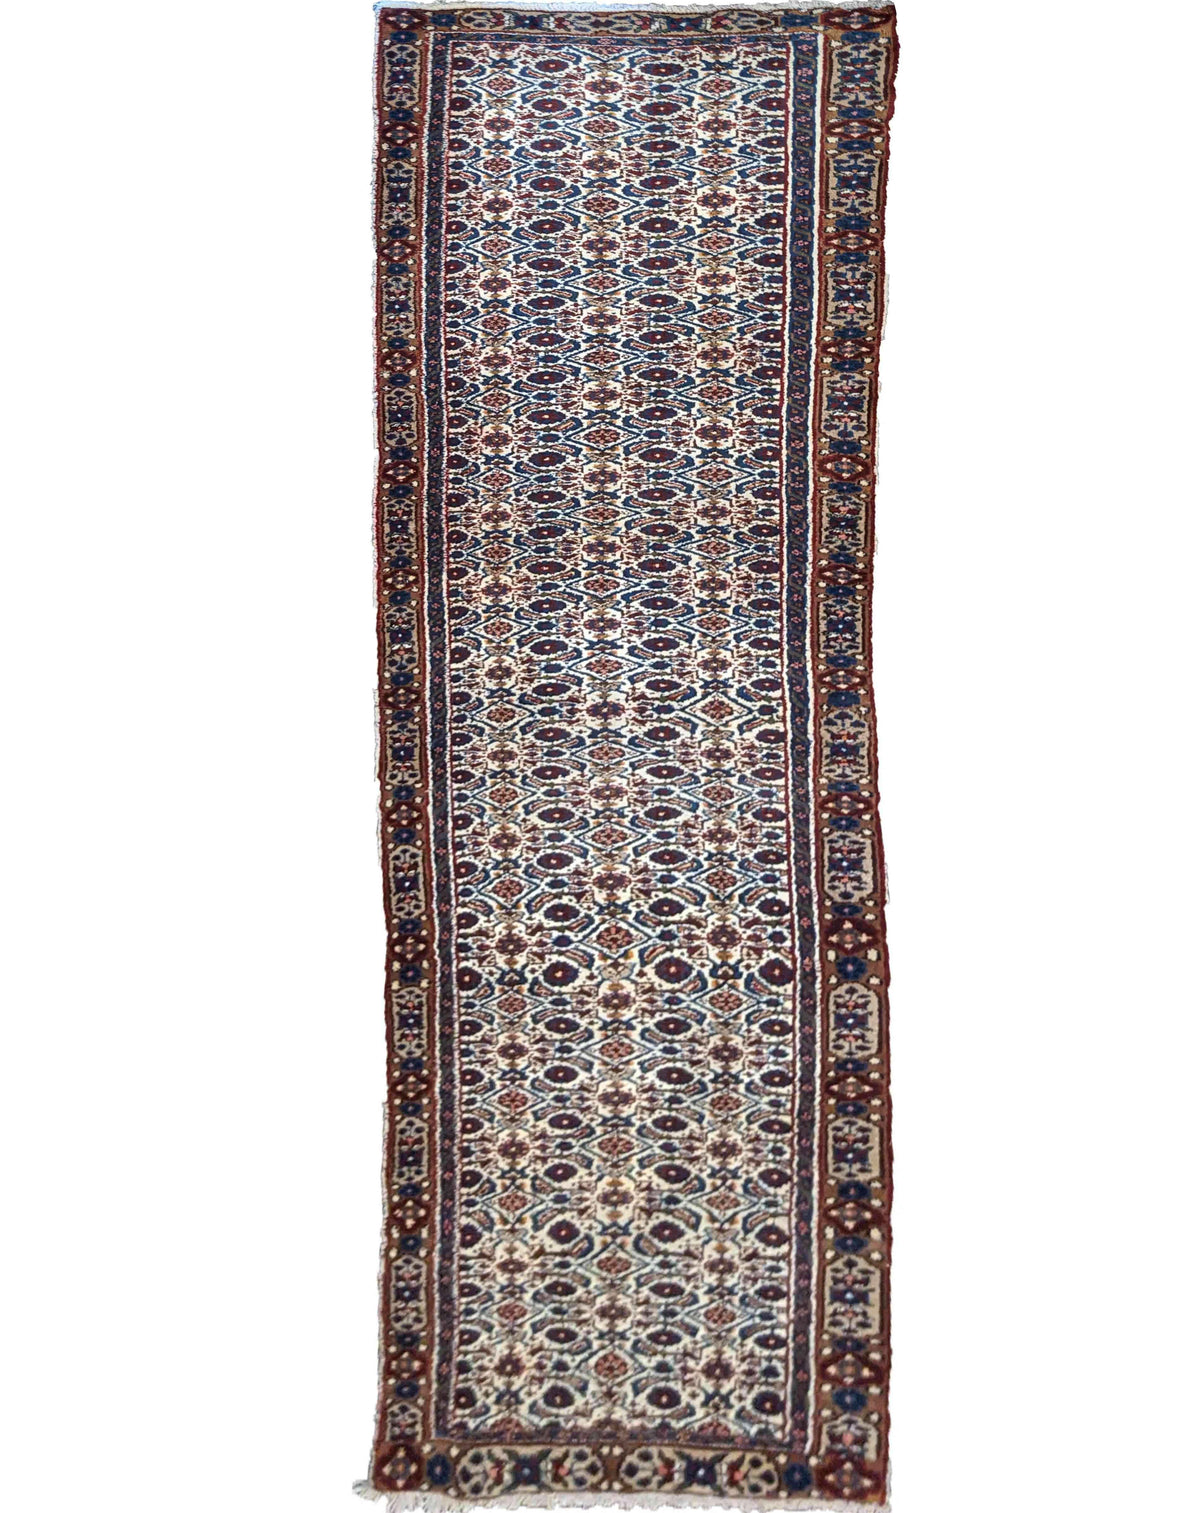 290 x 78 cm Persian Hamadan Traditional Blue Rug - Rugmaster